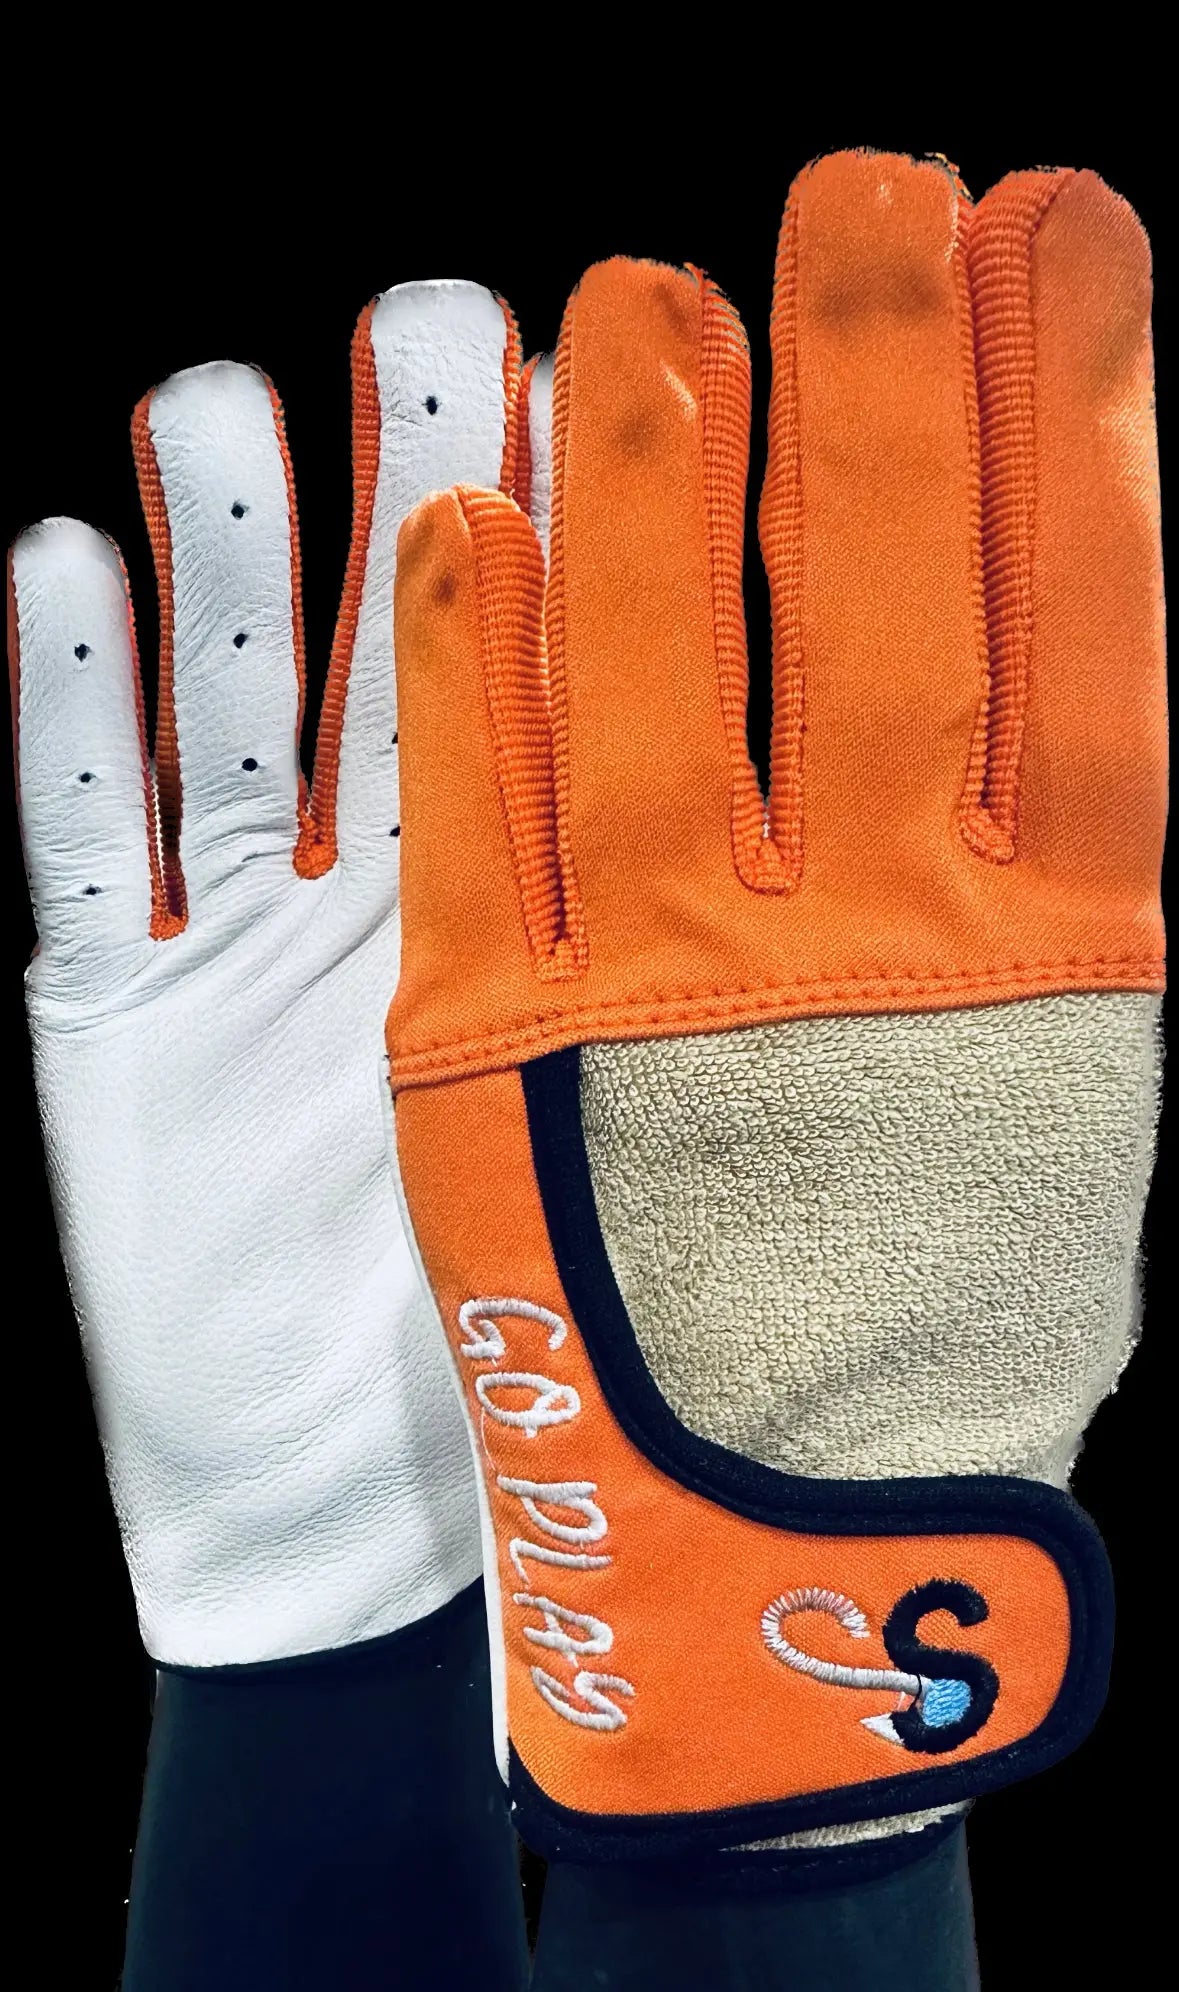 KOTC Pro Orange Gloves Unpadded Palms